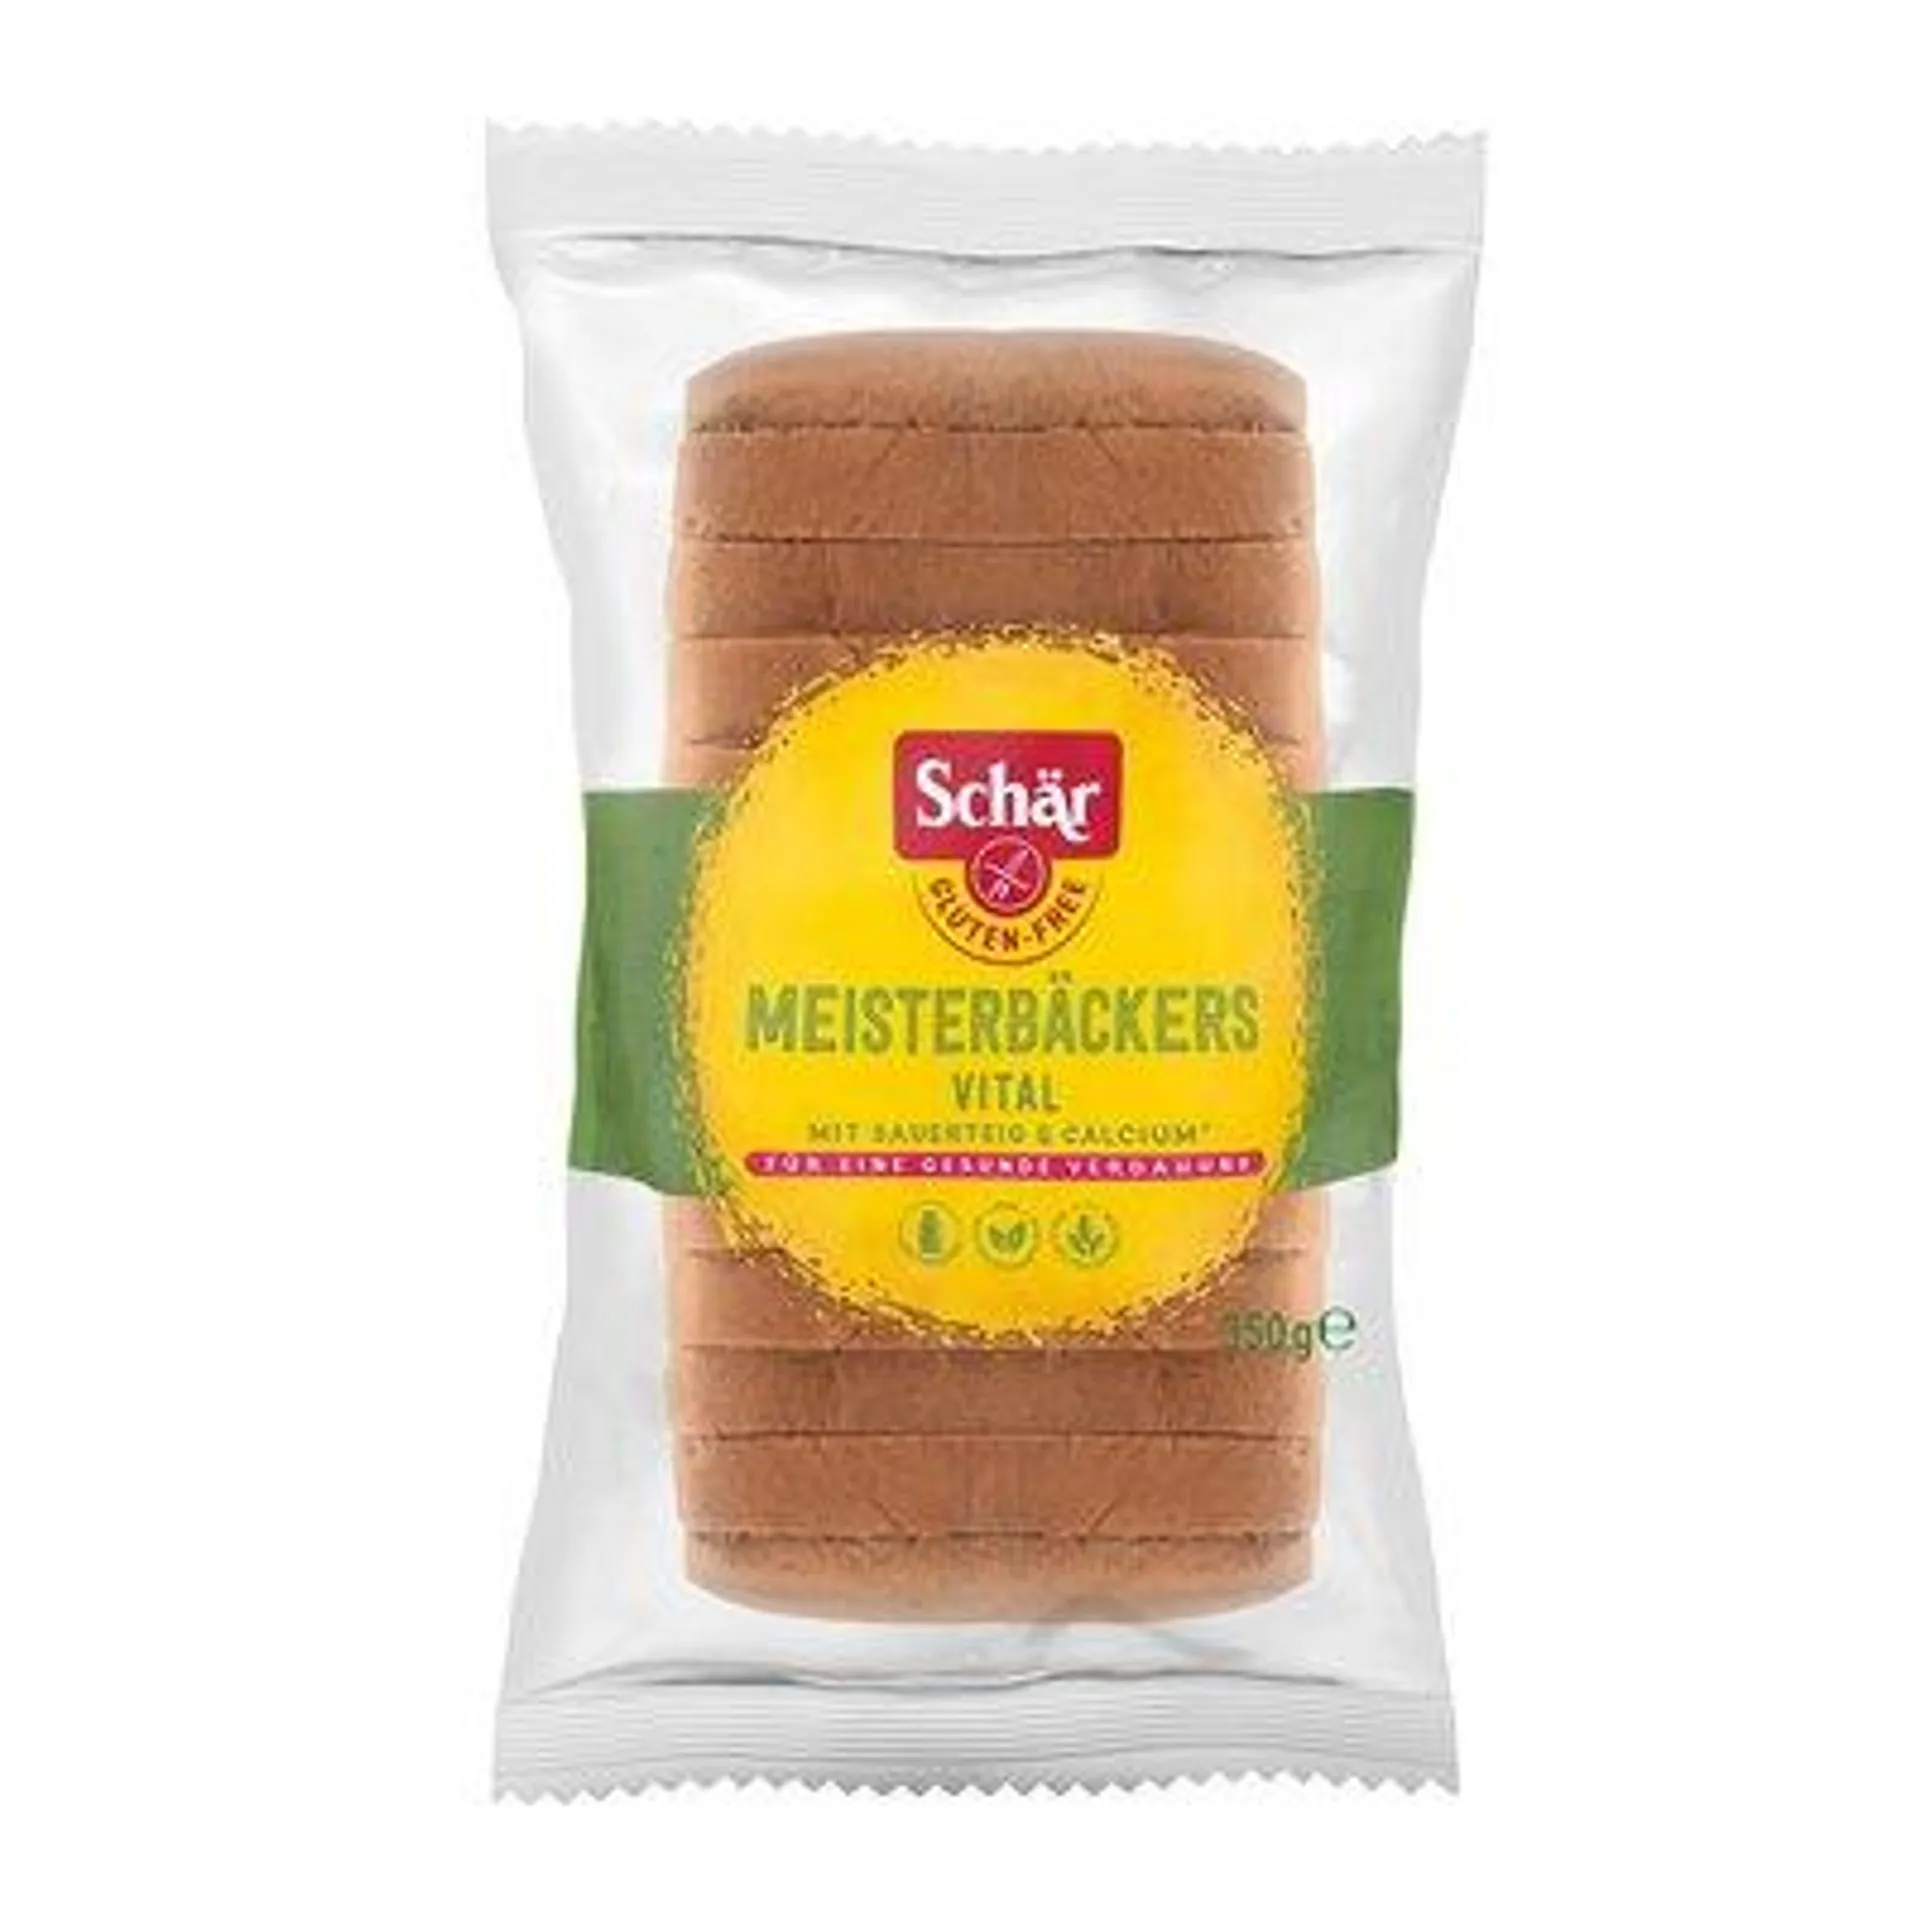 Schär Meisterbäckers Vital Glutenfrei